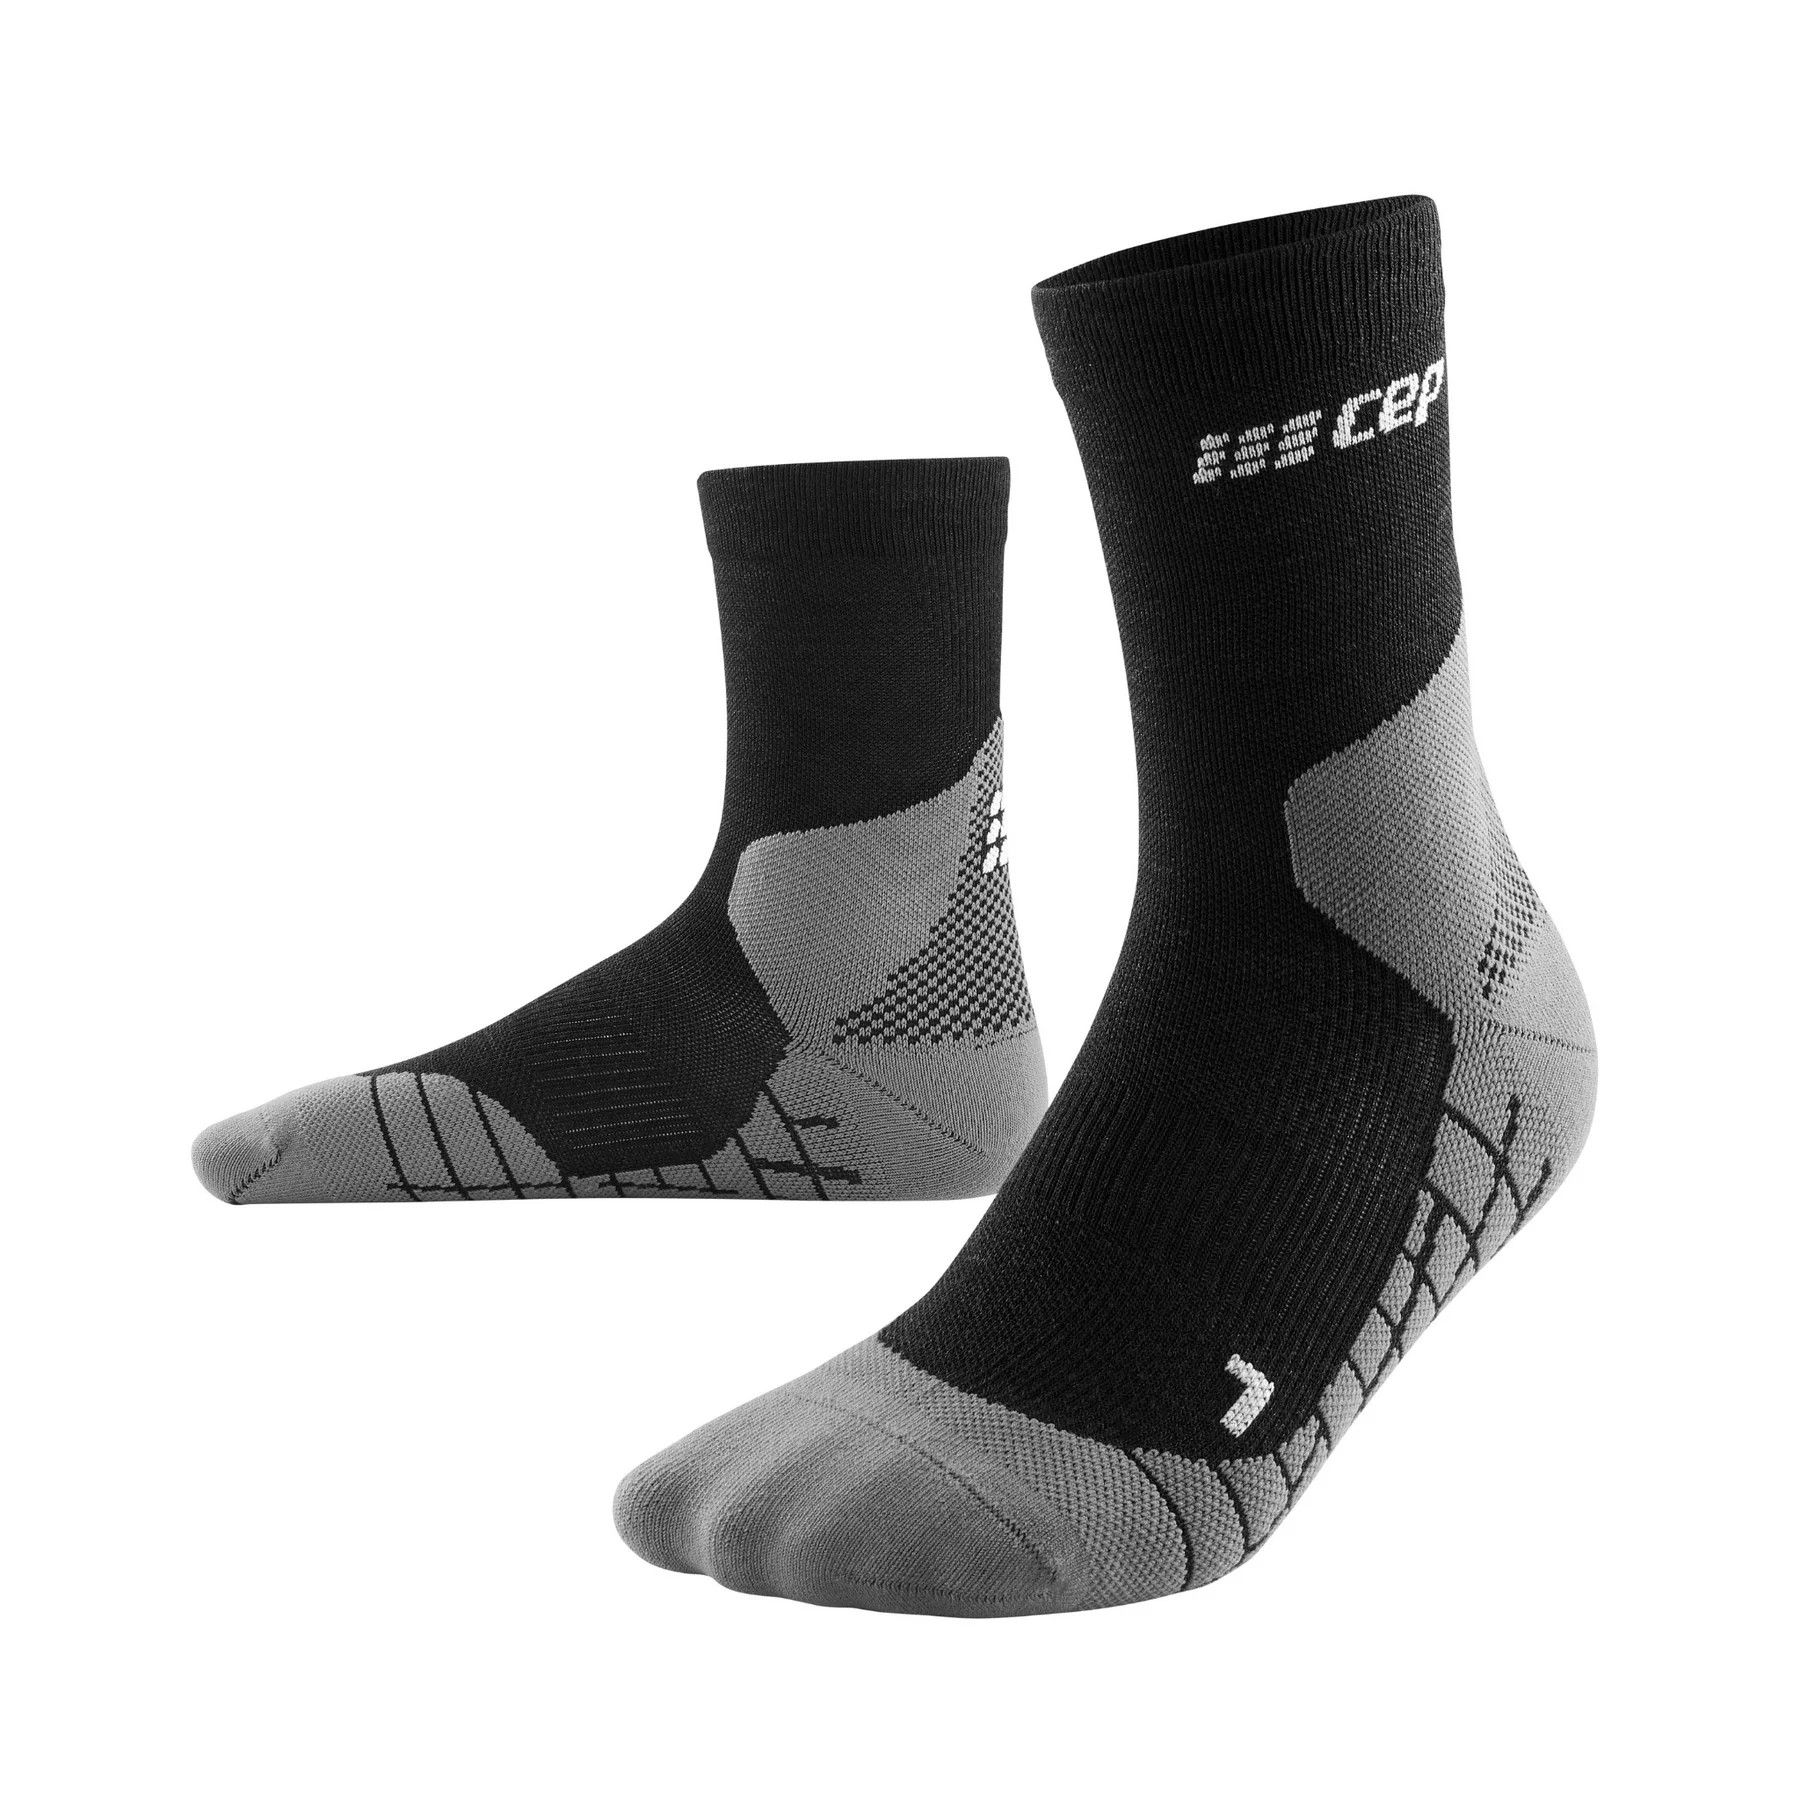 CEP Men’s Hiking Light Merino Mid Cut Compression Socks Black